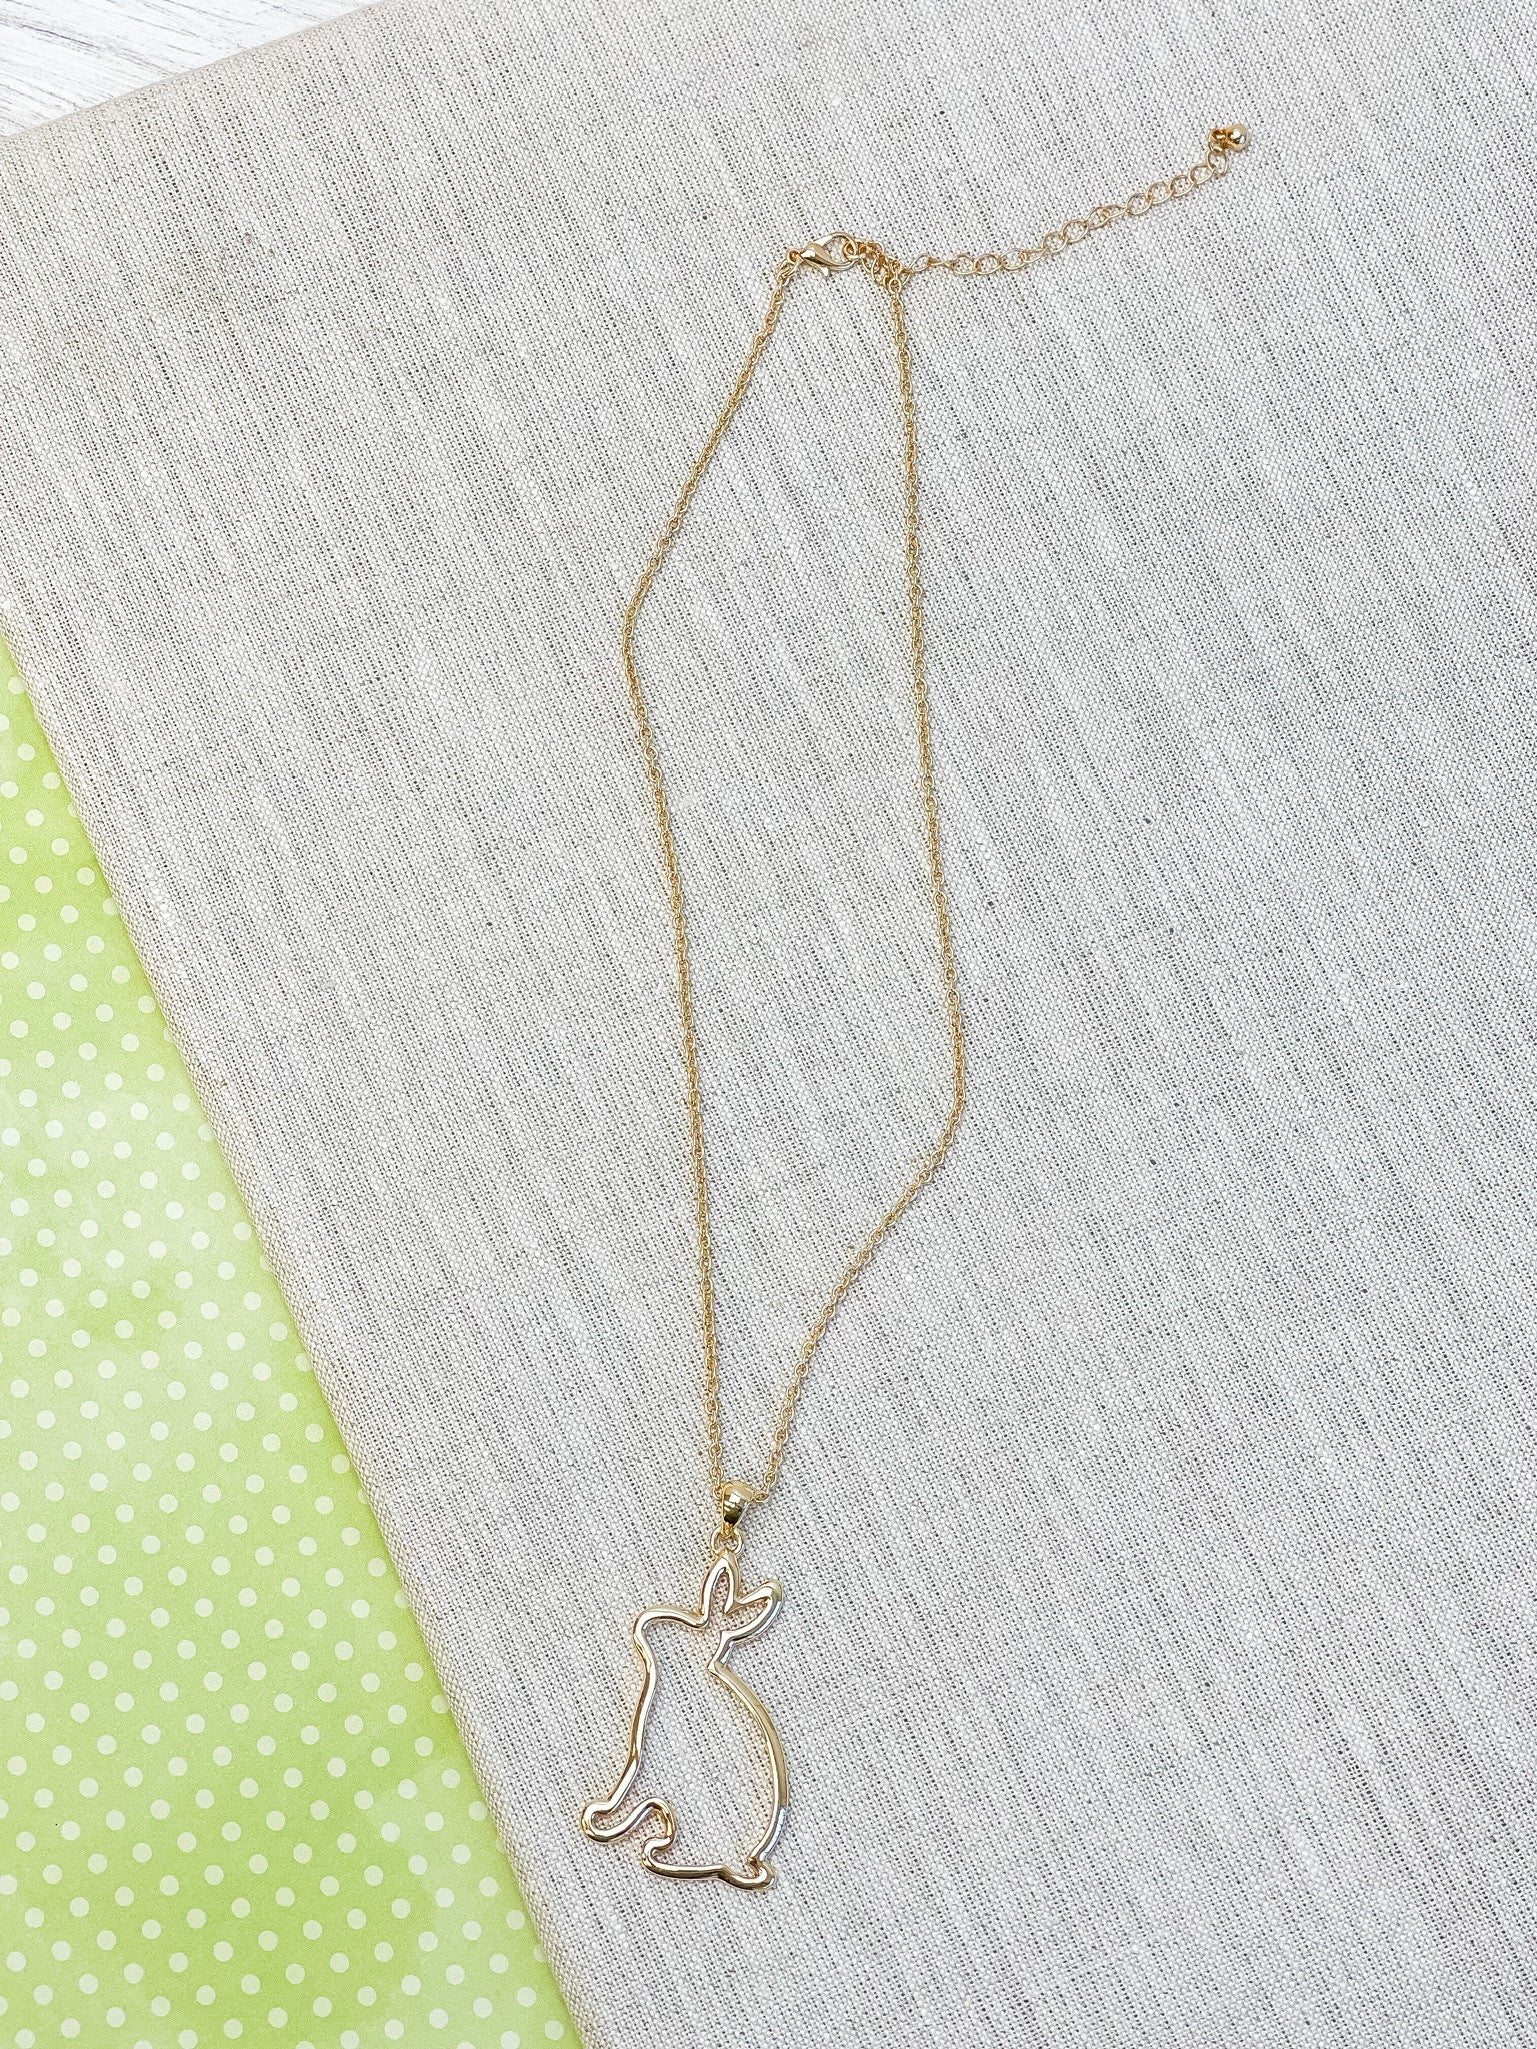 Bunny Cutout Pendant Necklace - Gold